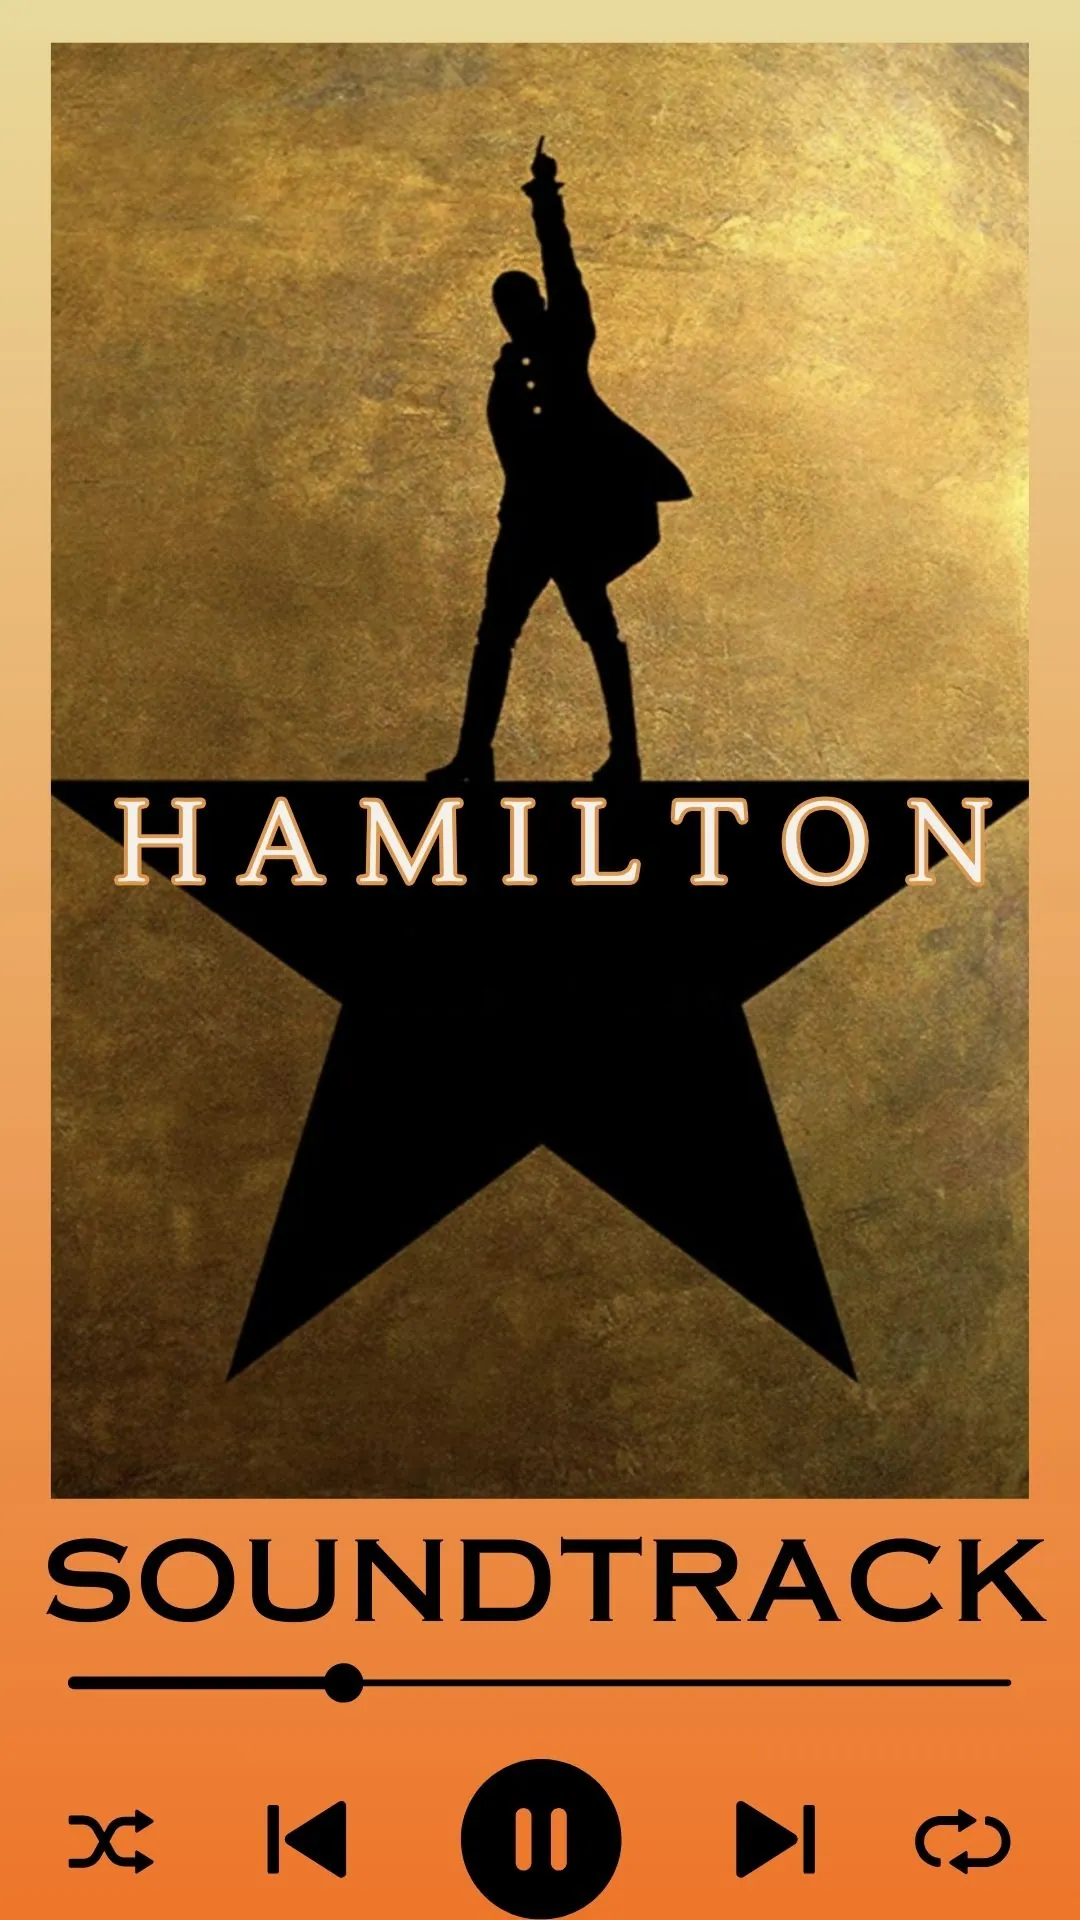 Hamilton Soundtrack List